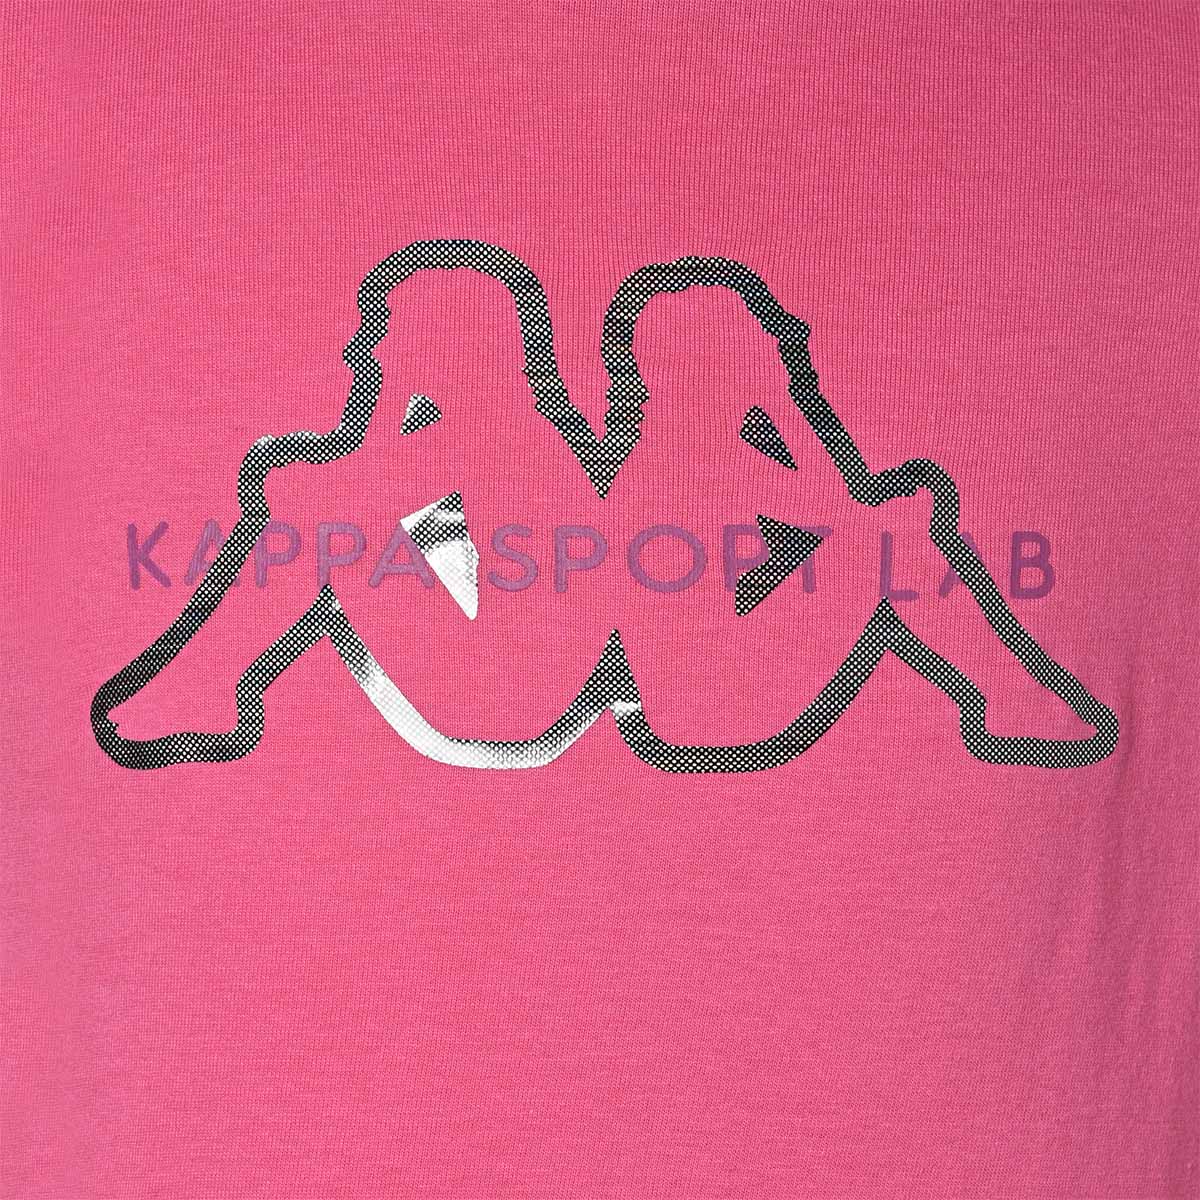 Camiseta Kappa Giaglione